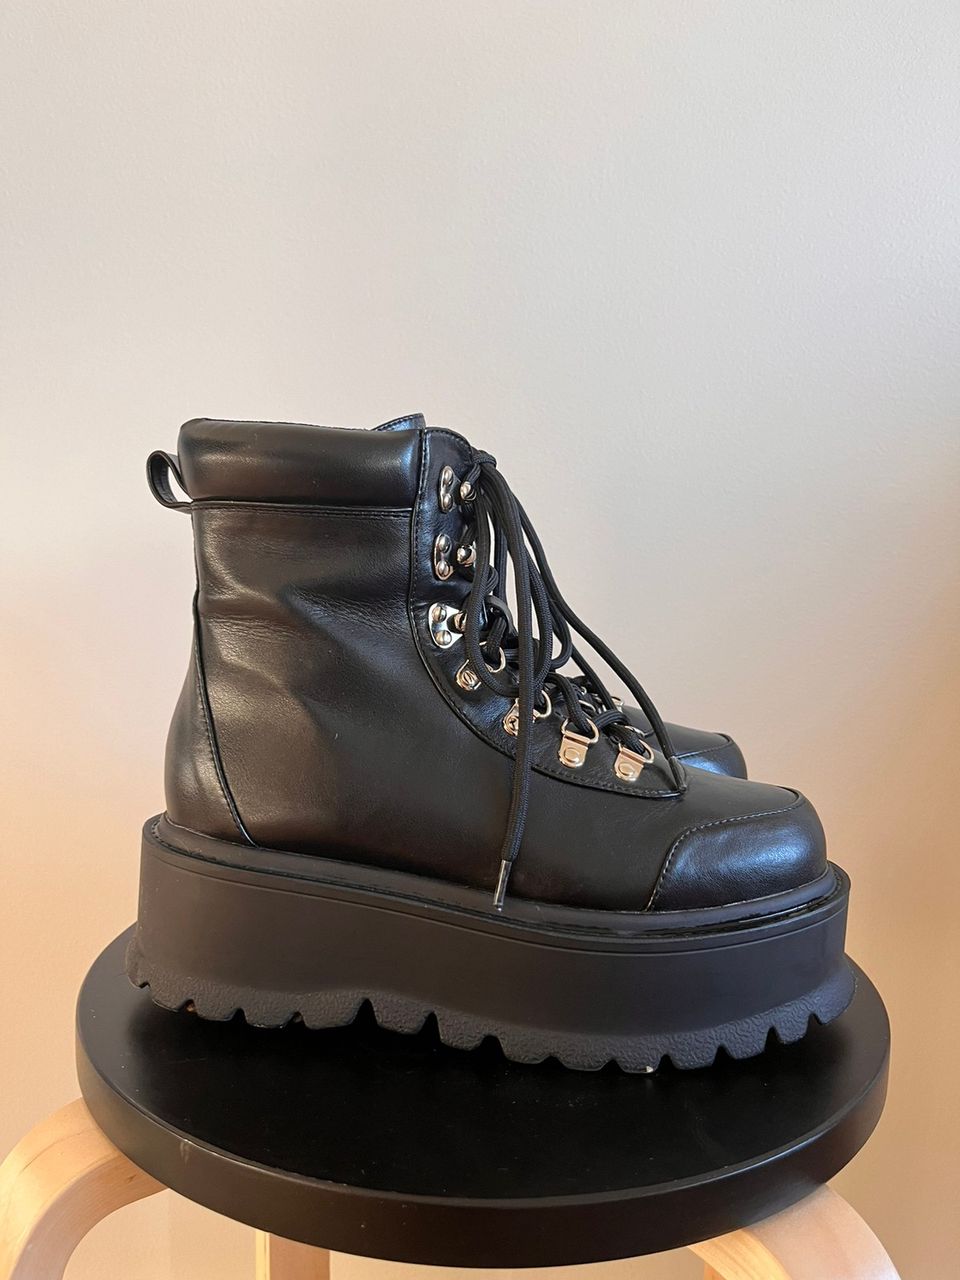 Koi foorwear Hydra Matrix Platform Boots